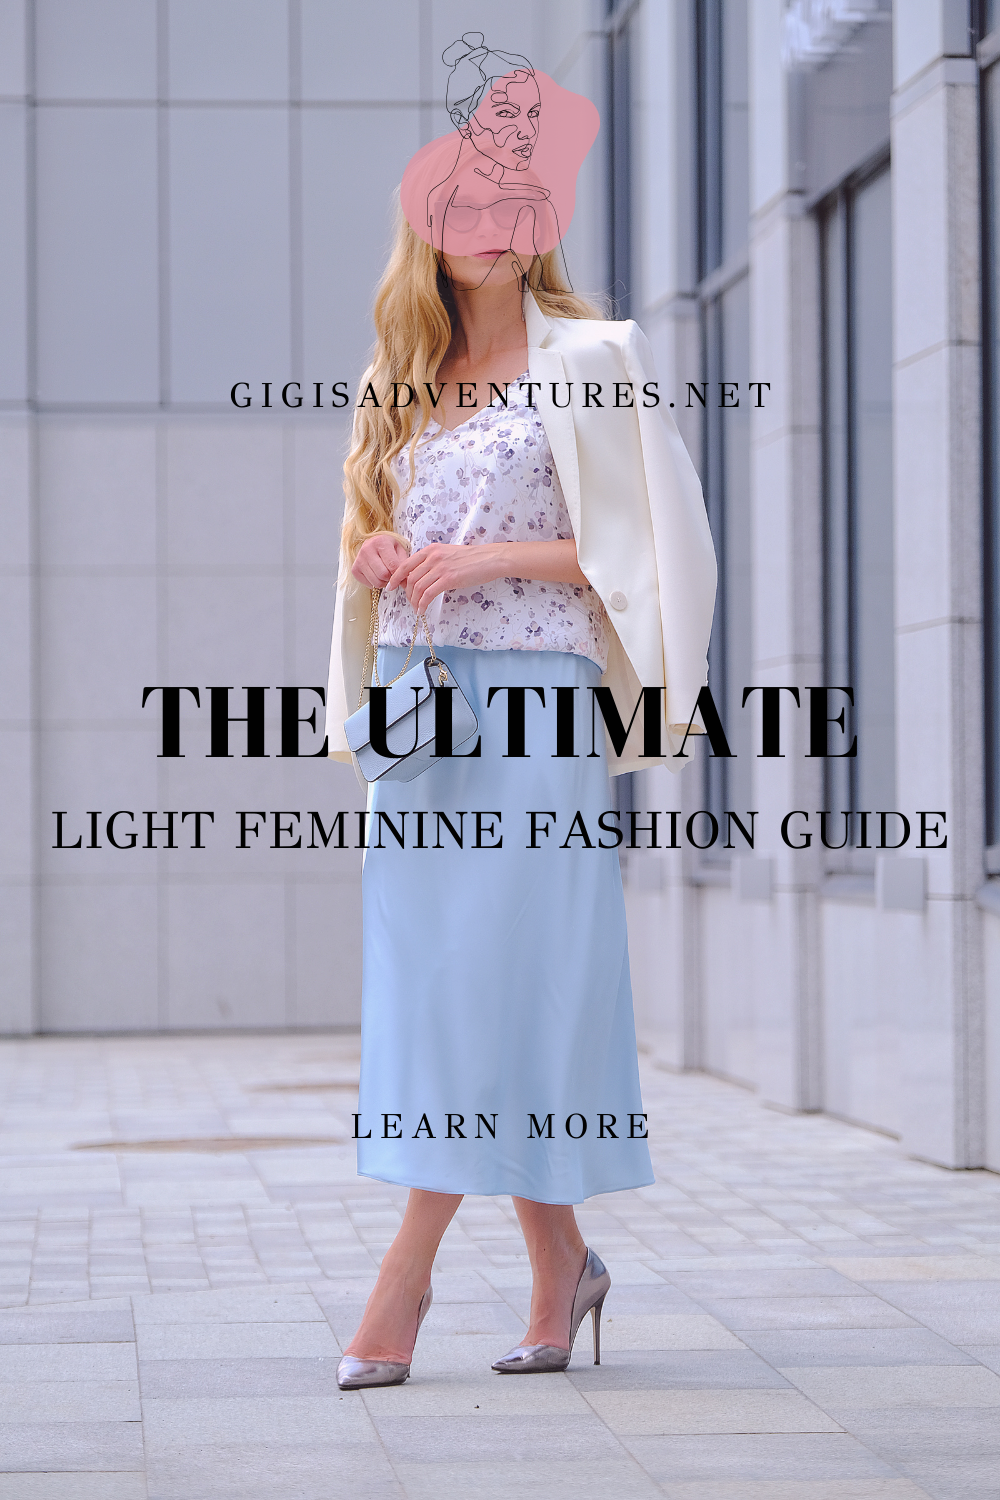 The Ultimate Light Feminine Fashion Guide